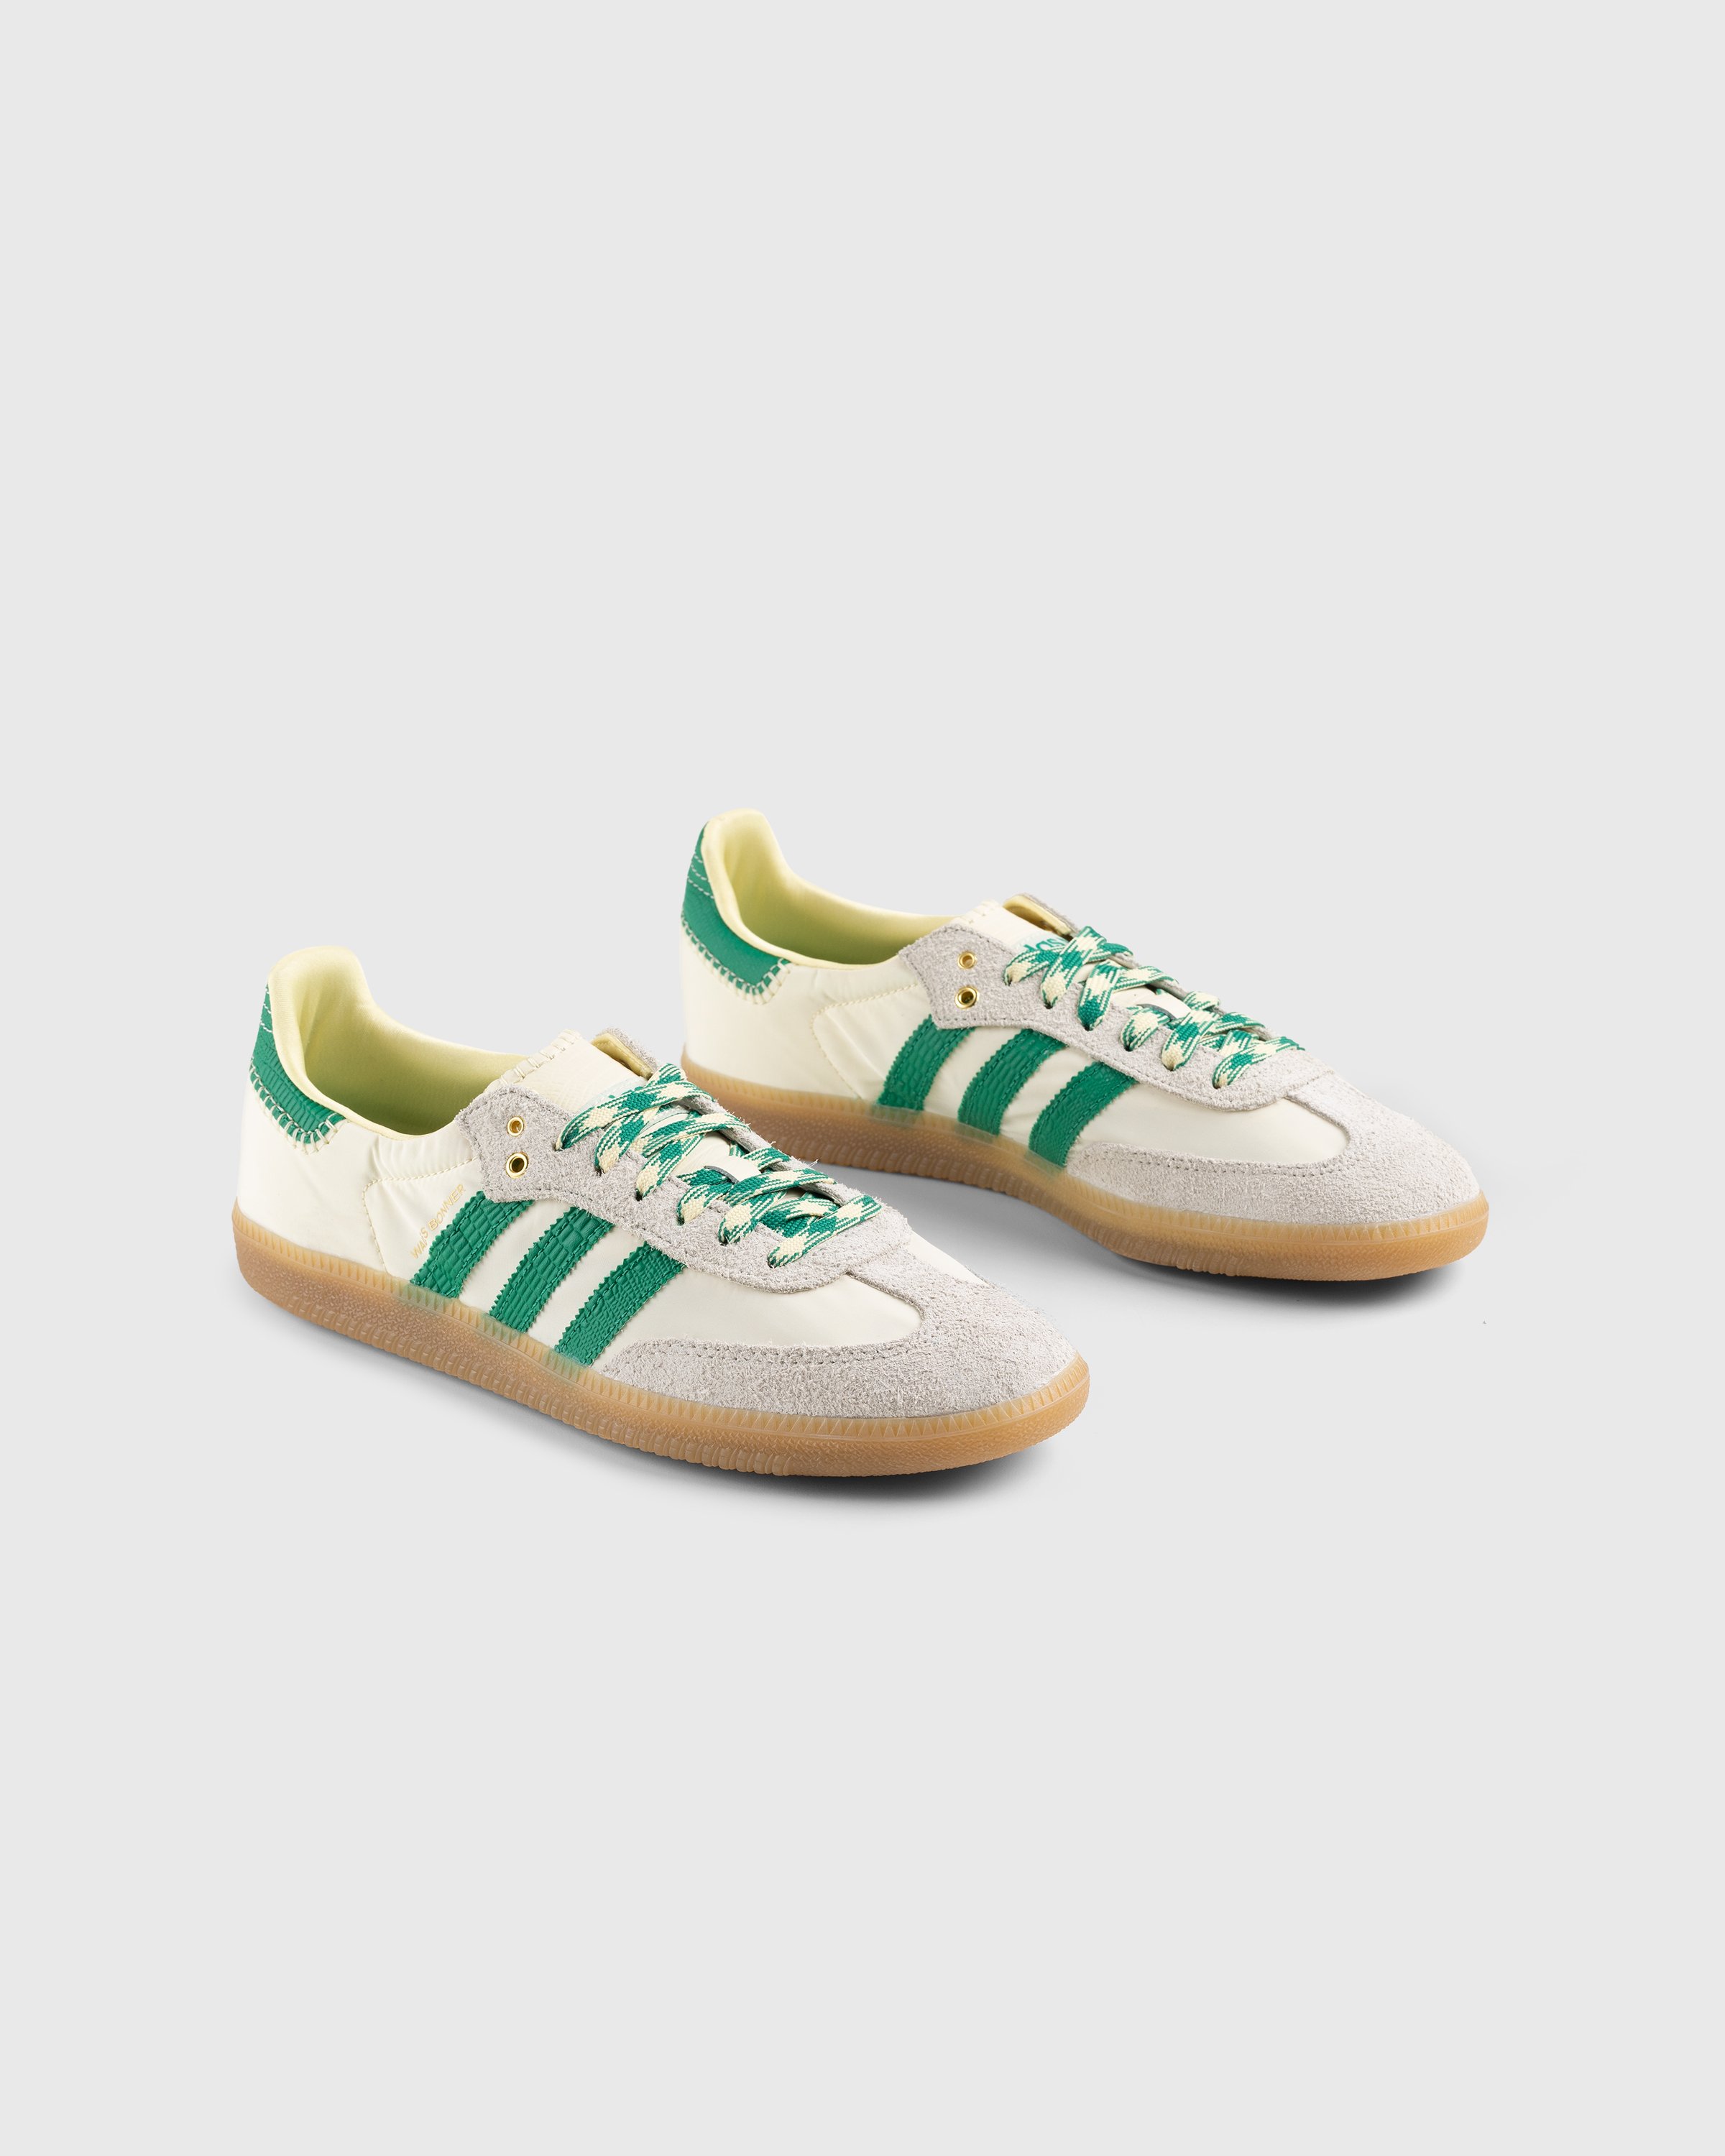 Adidas x Wales Bonner - WB Samba Cream White/Bold Green/Easy Yellow - Footwear - Beige - Image 3